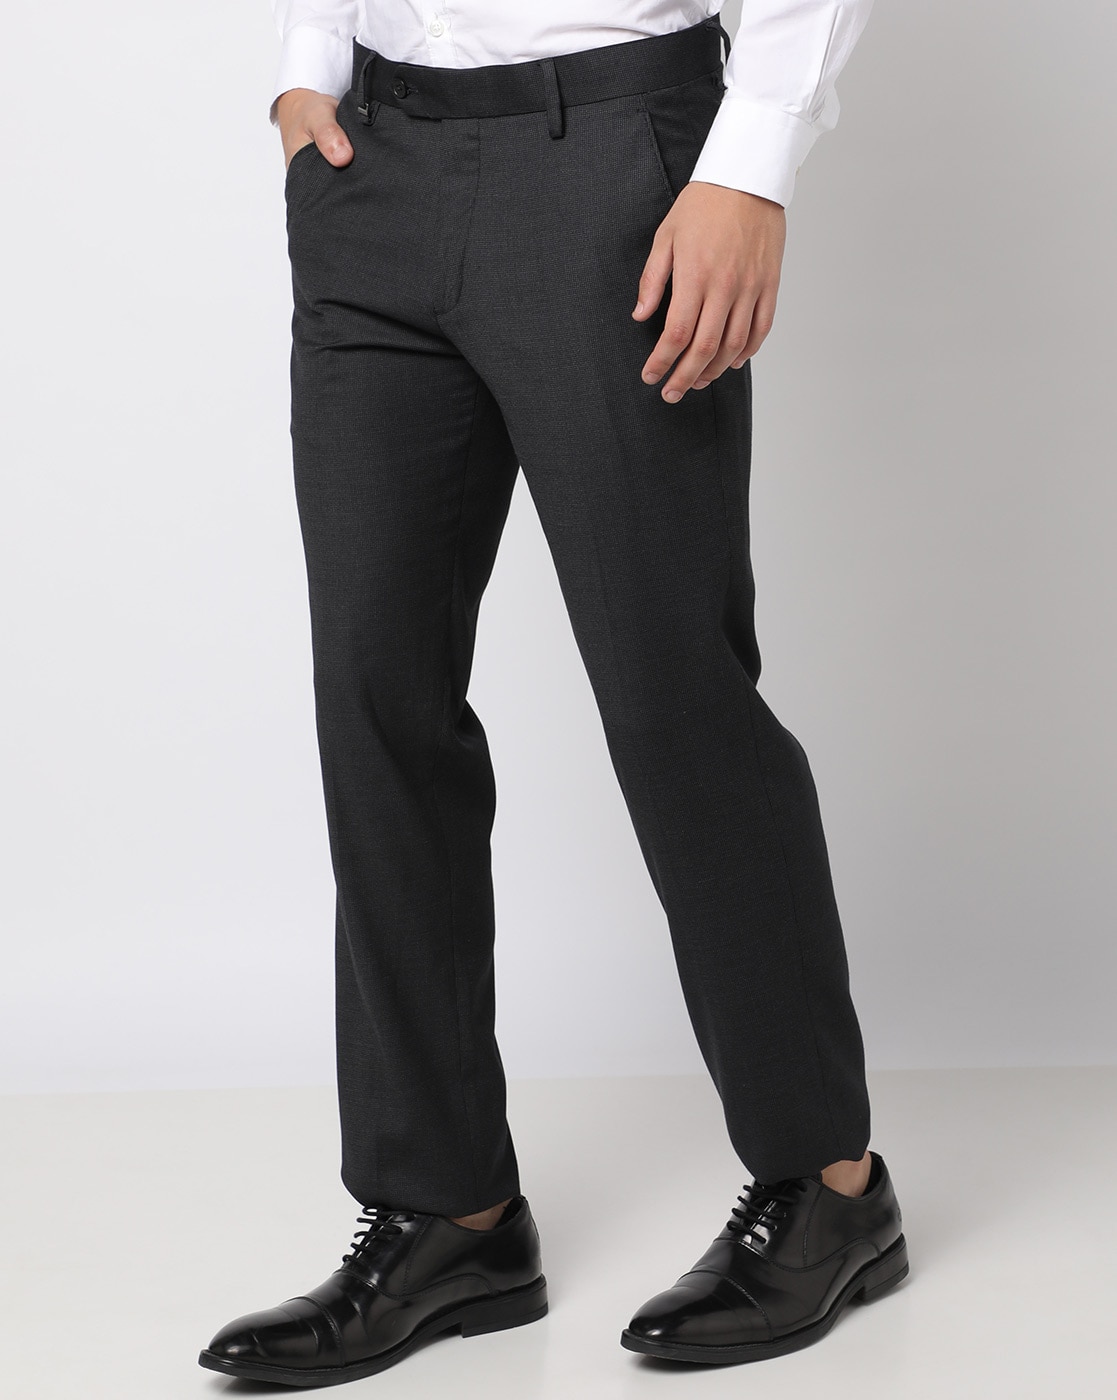 Buy Men Black Solid Regular Fit Formal Trousers Online  173302  Peter  England